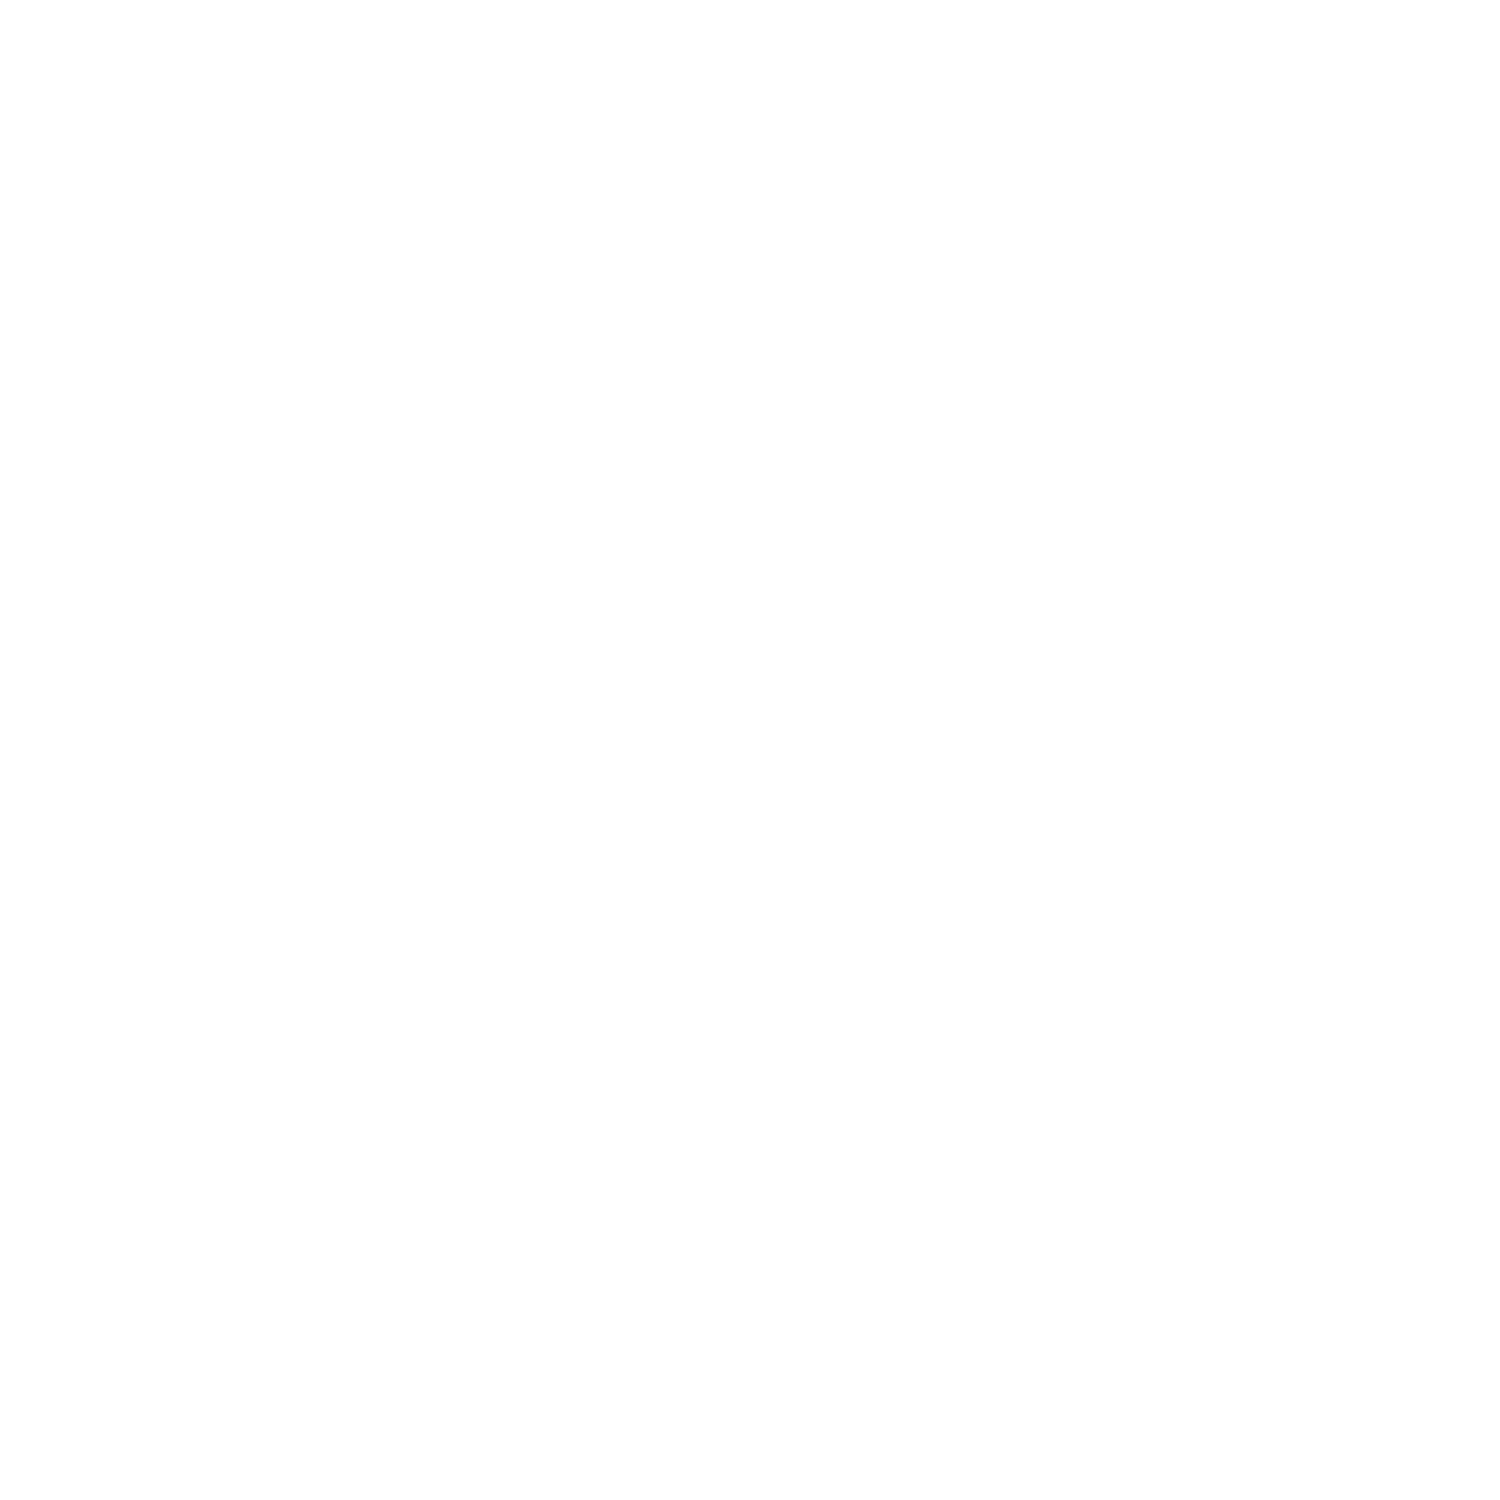 Missoula Alliance Church, Missoula, Montana